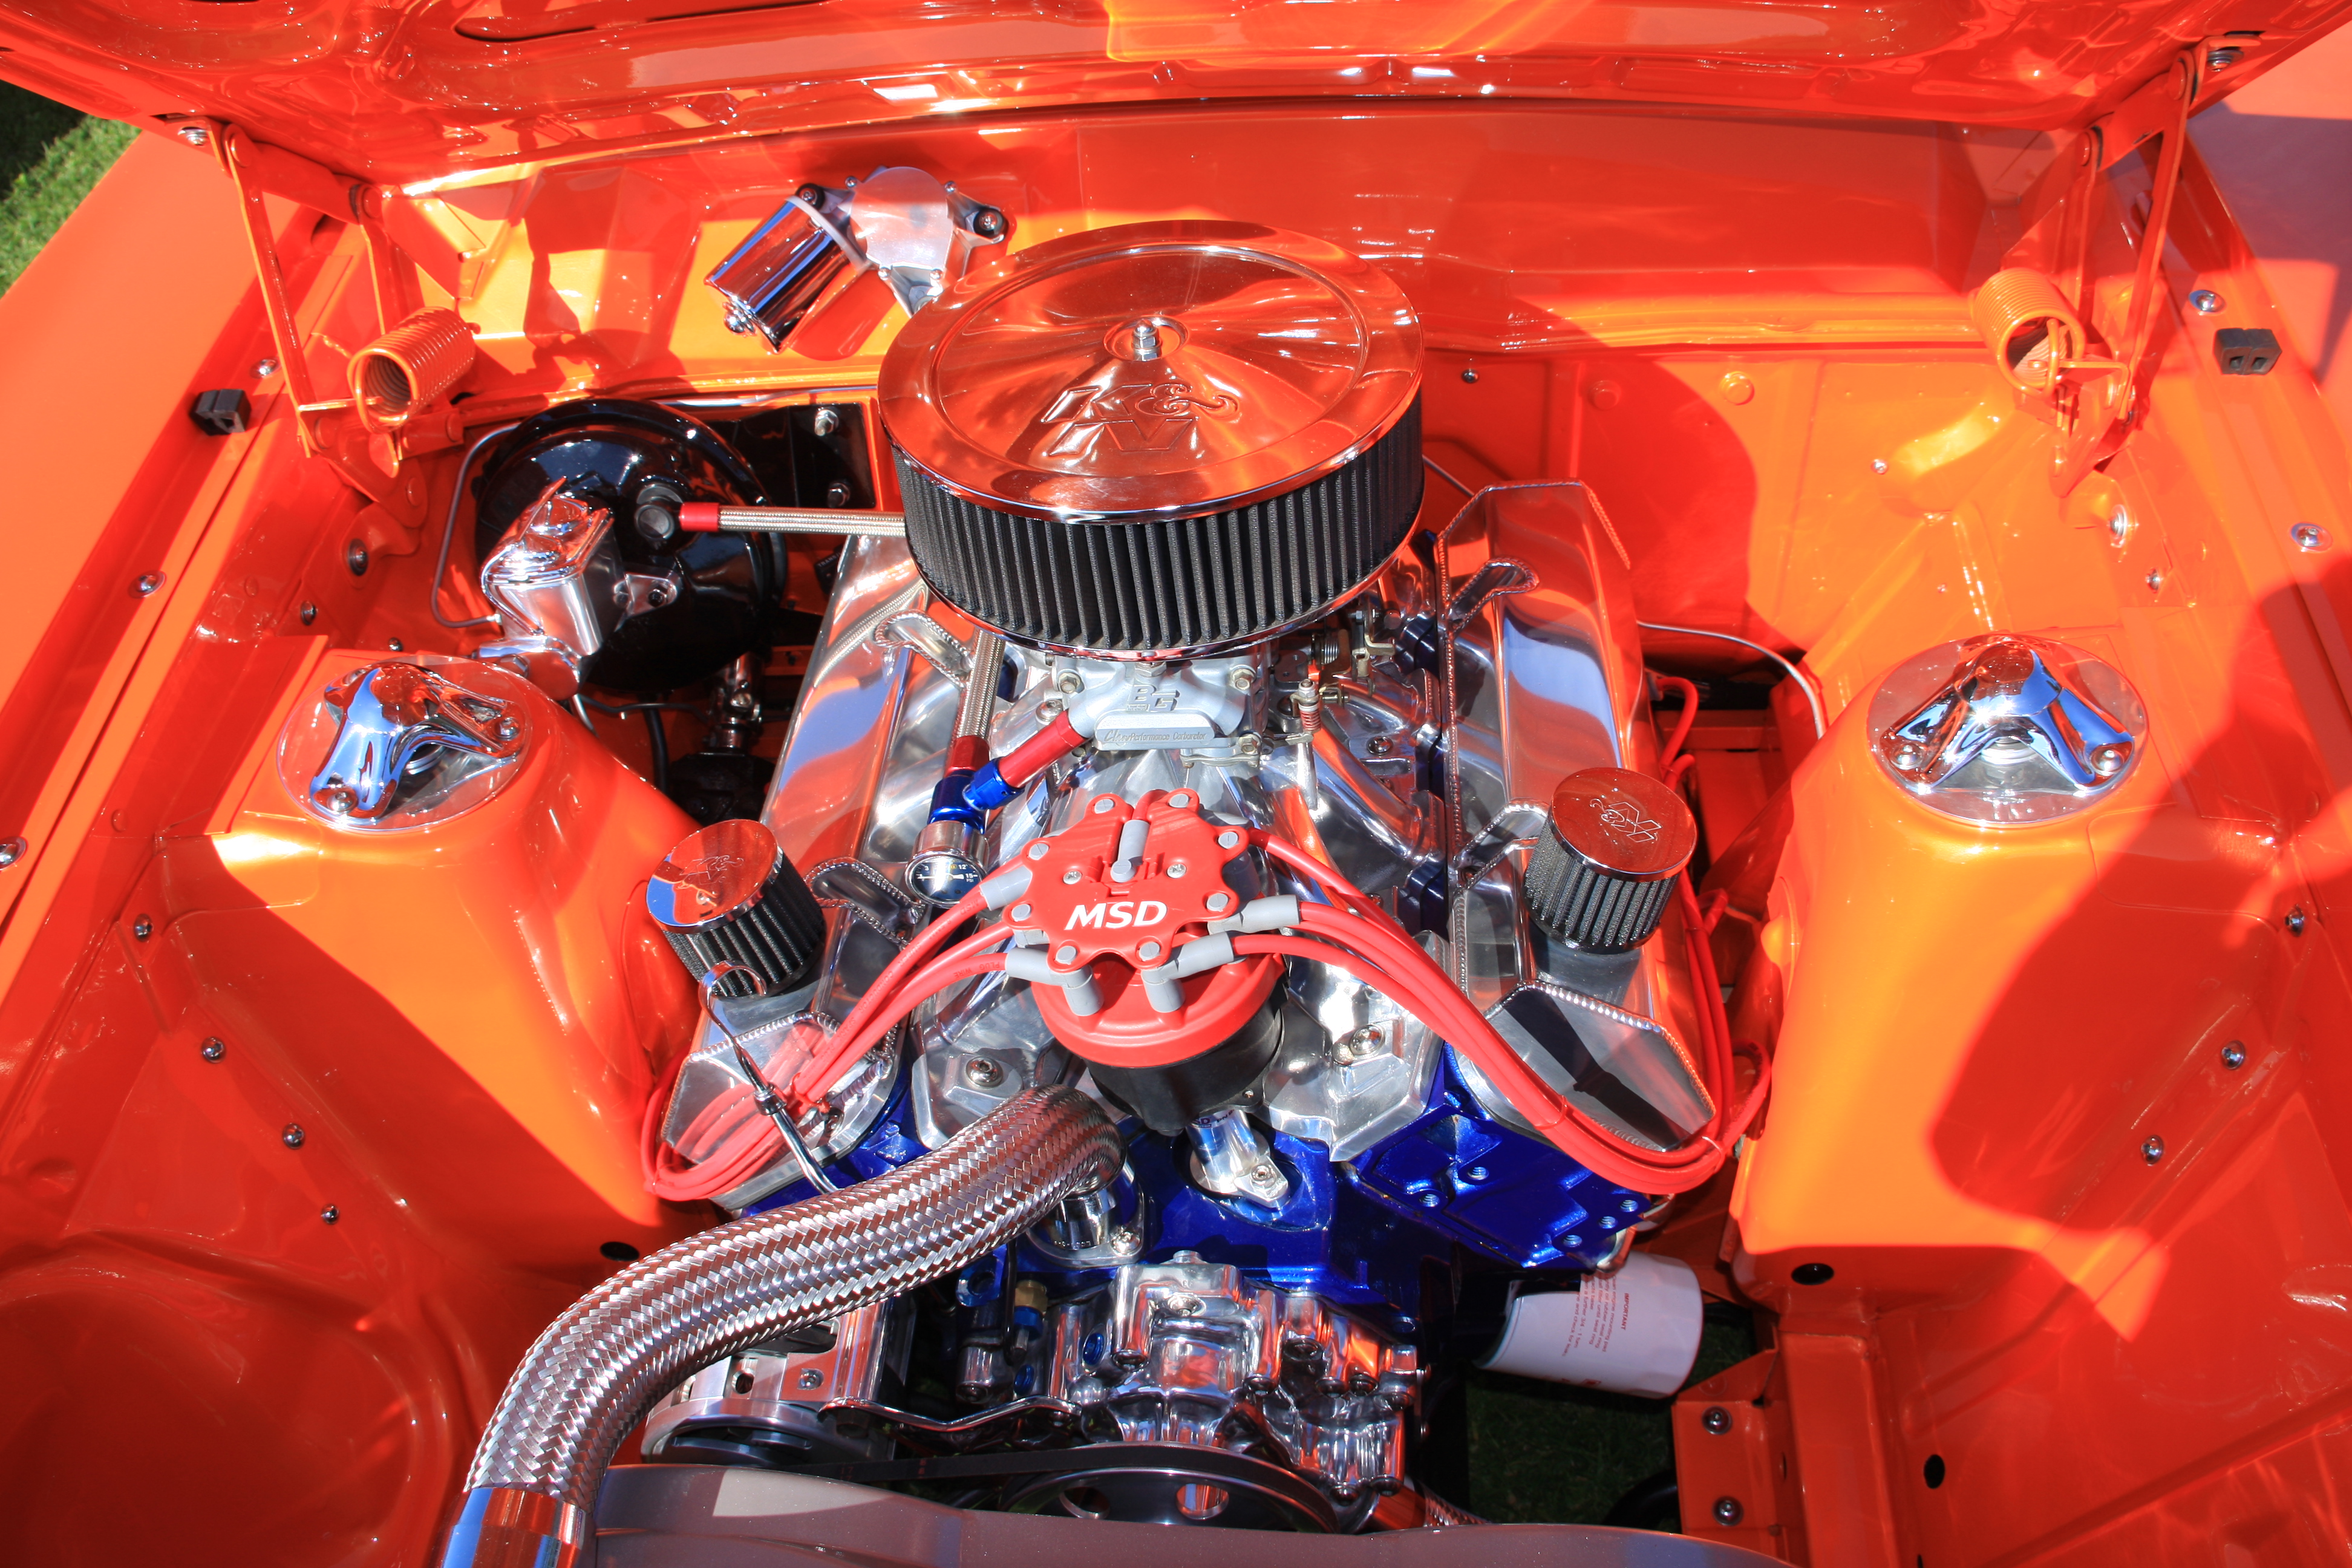 Ford v8 custom engine 1